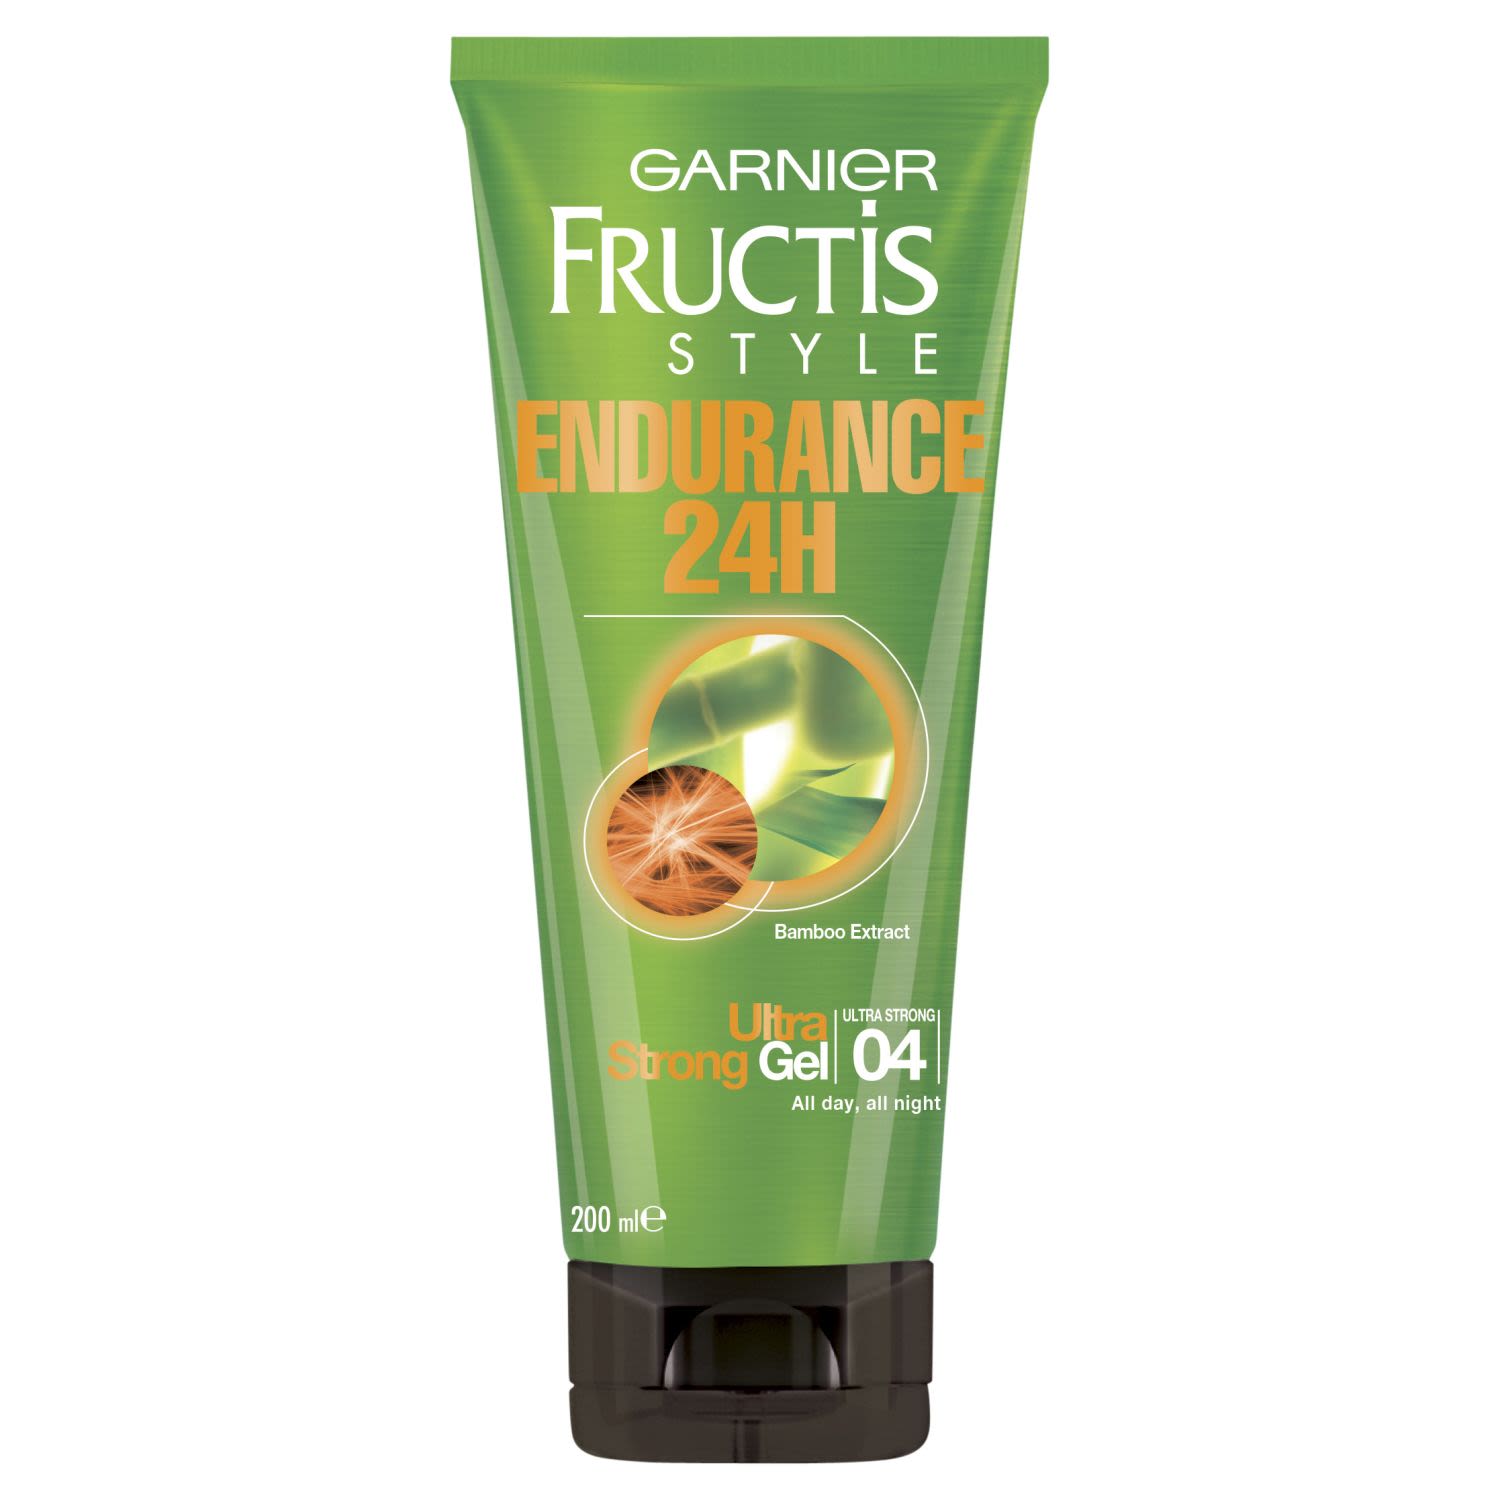 Garnier Fructis Style Endurance 24h Gel for Ultra Strong Hold, 200 Millilitre